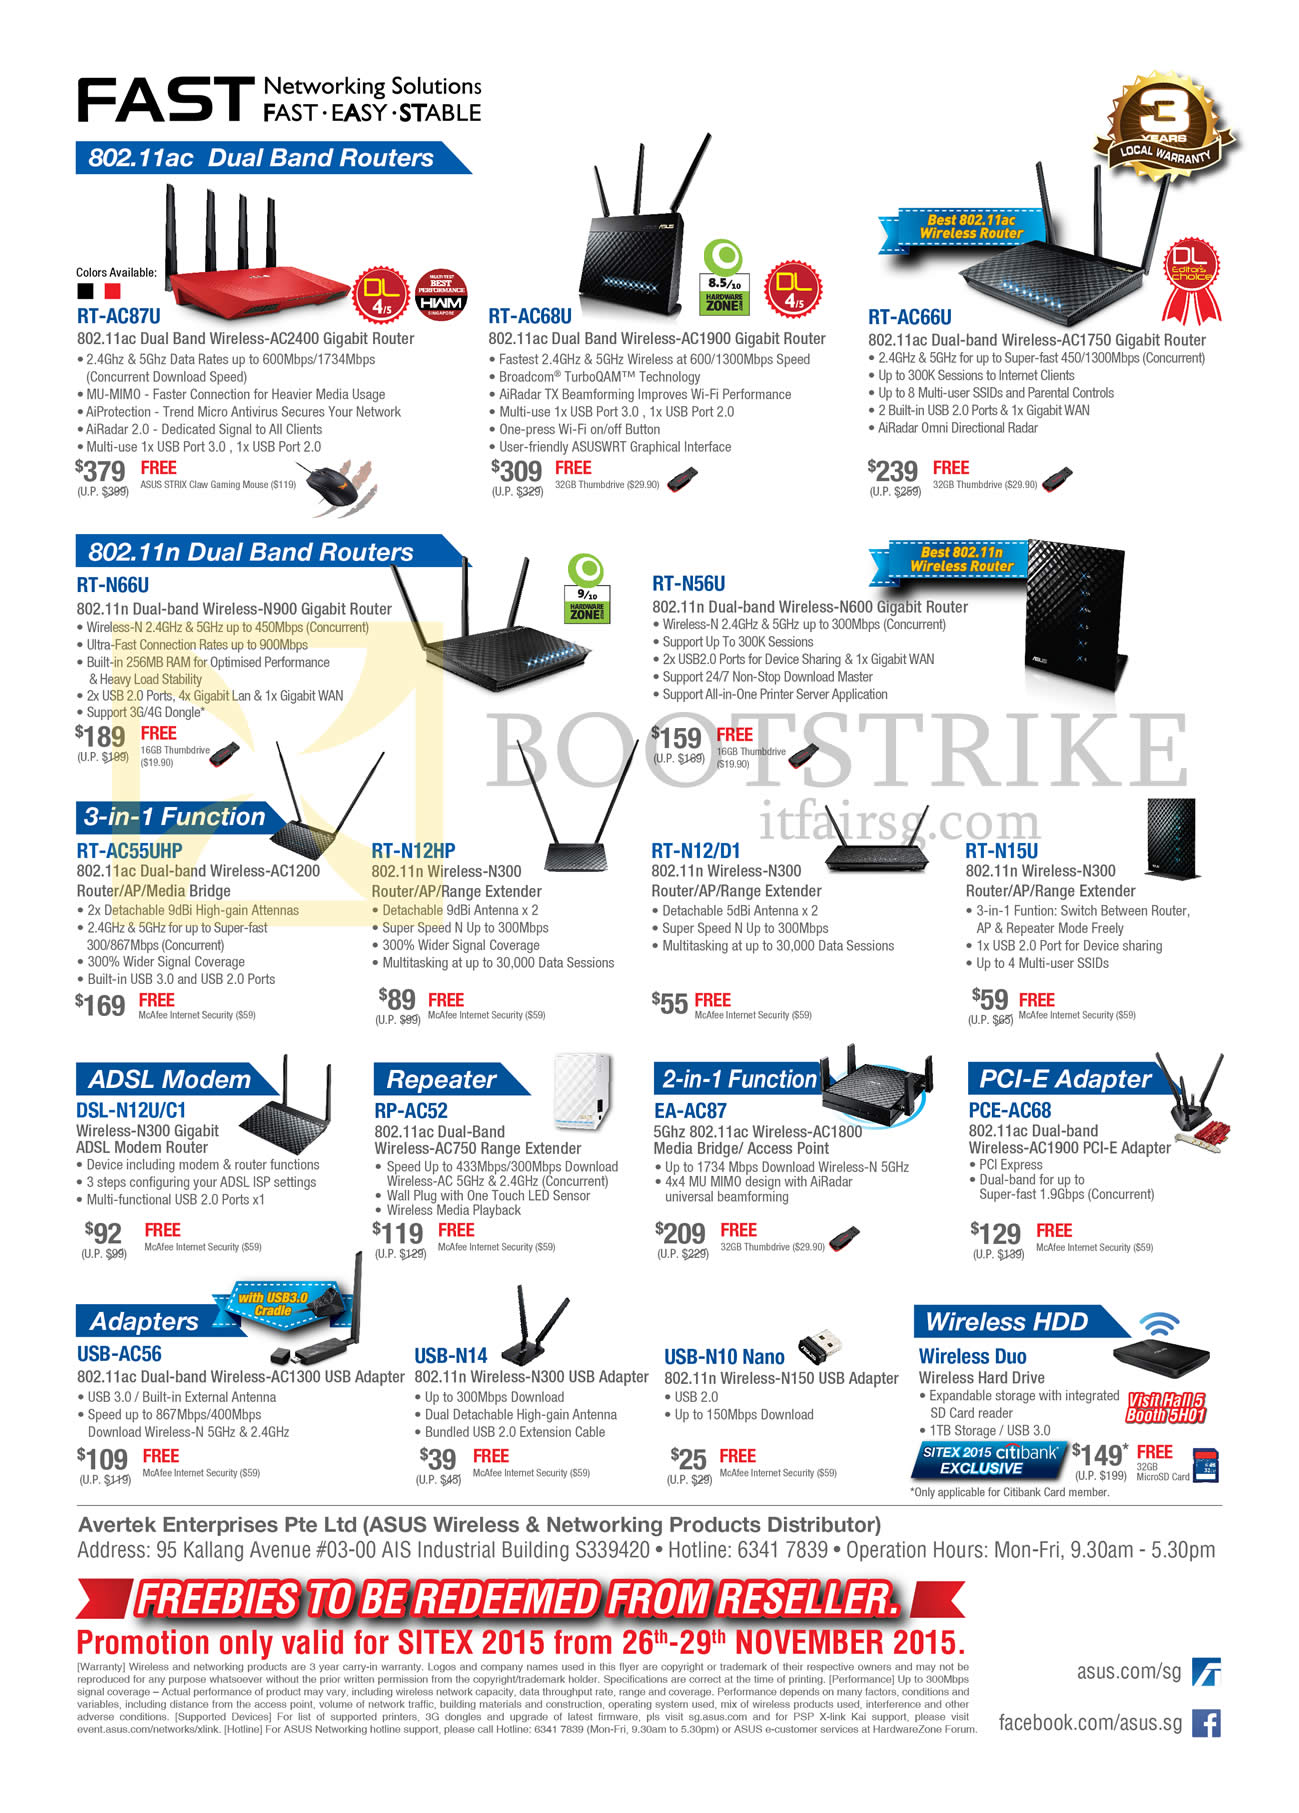 SITEX 2015 price list image brochure of ASUS Networking Routers RT-AC87U, AC68U, AC66U, N66U, N56U, AC55UHP, N12HP, N12D1, N15U, DSL-N12UC1, RP-AC52, EA-AC87, PCE-AC68, USB-AC56, N14, N10 Nano